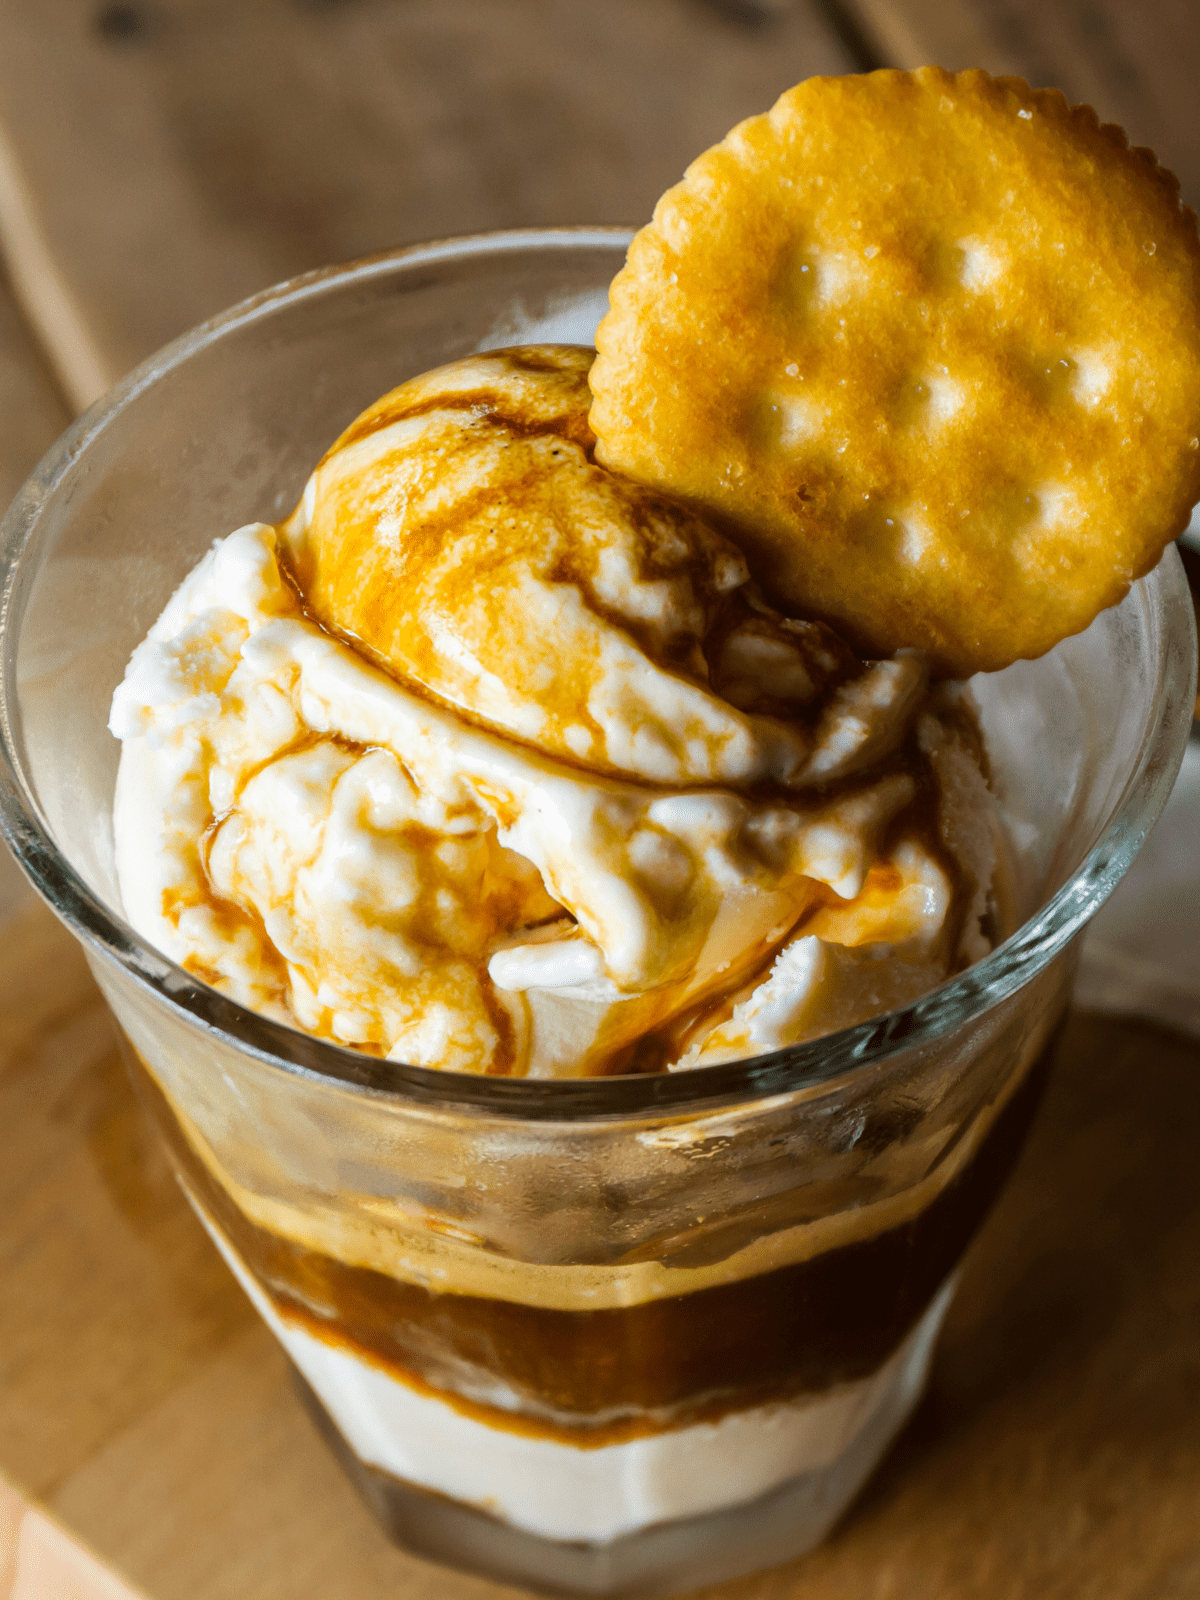 Vanilla ice cream in a glass topped with espresso and a Ritz cracker.